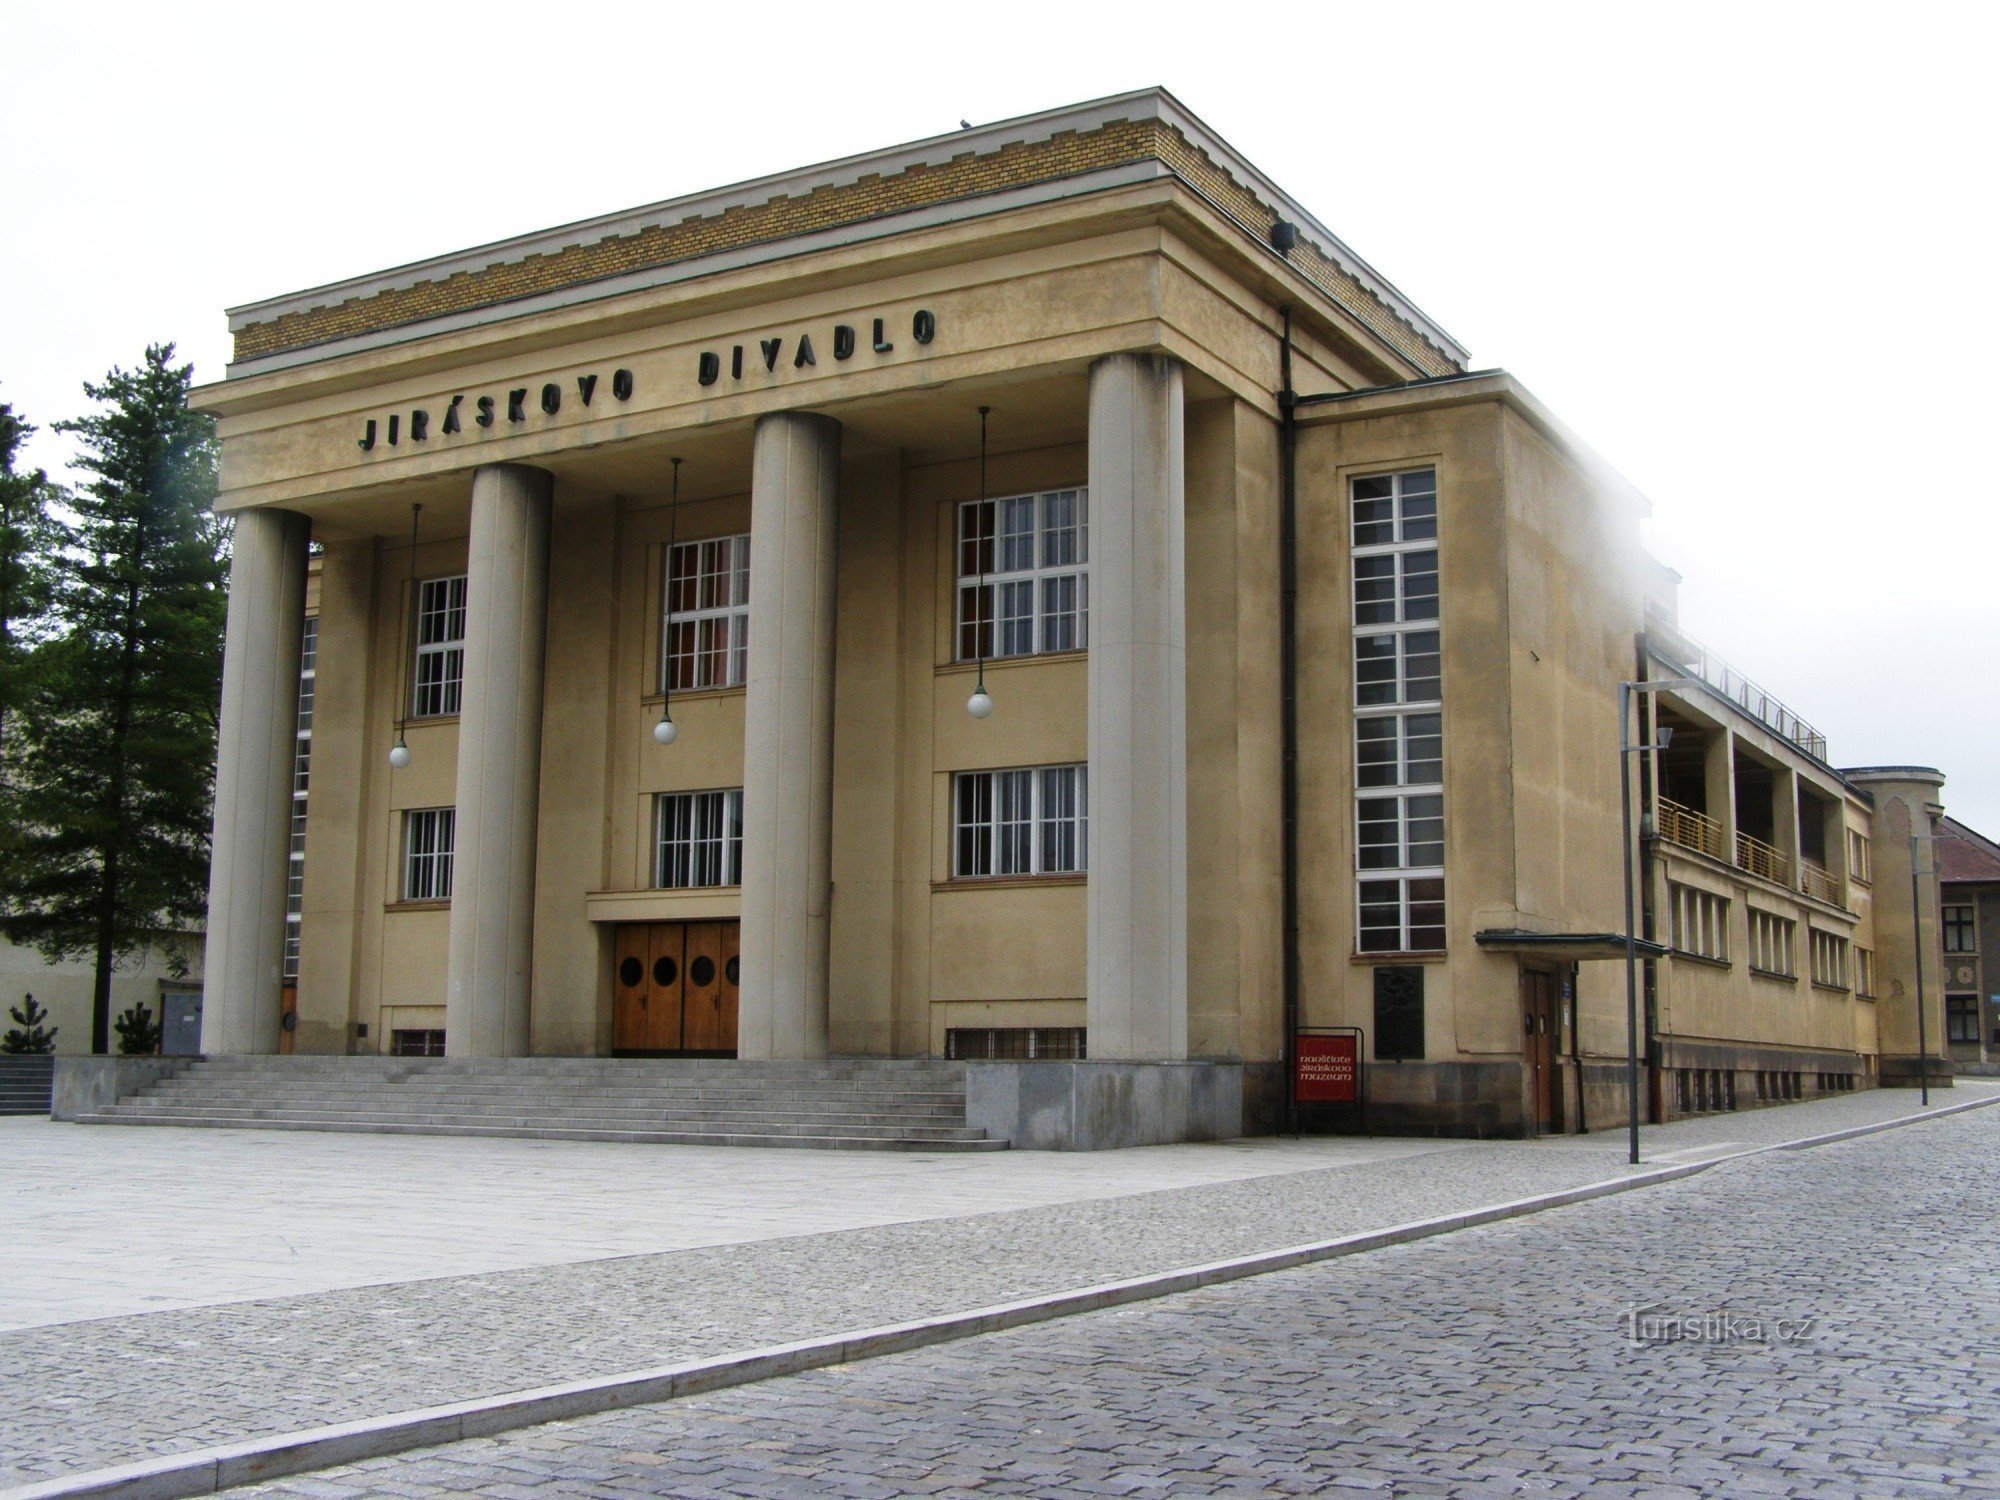 Hronov - Jirásk-teatern, museum